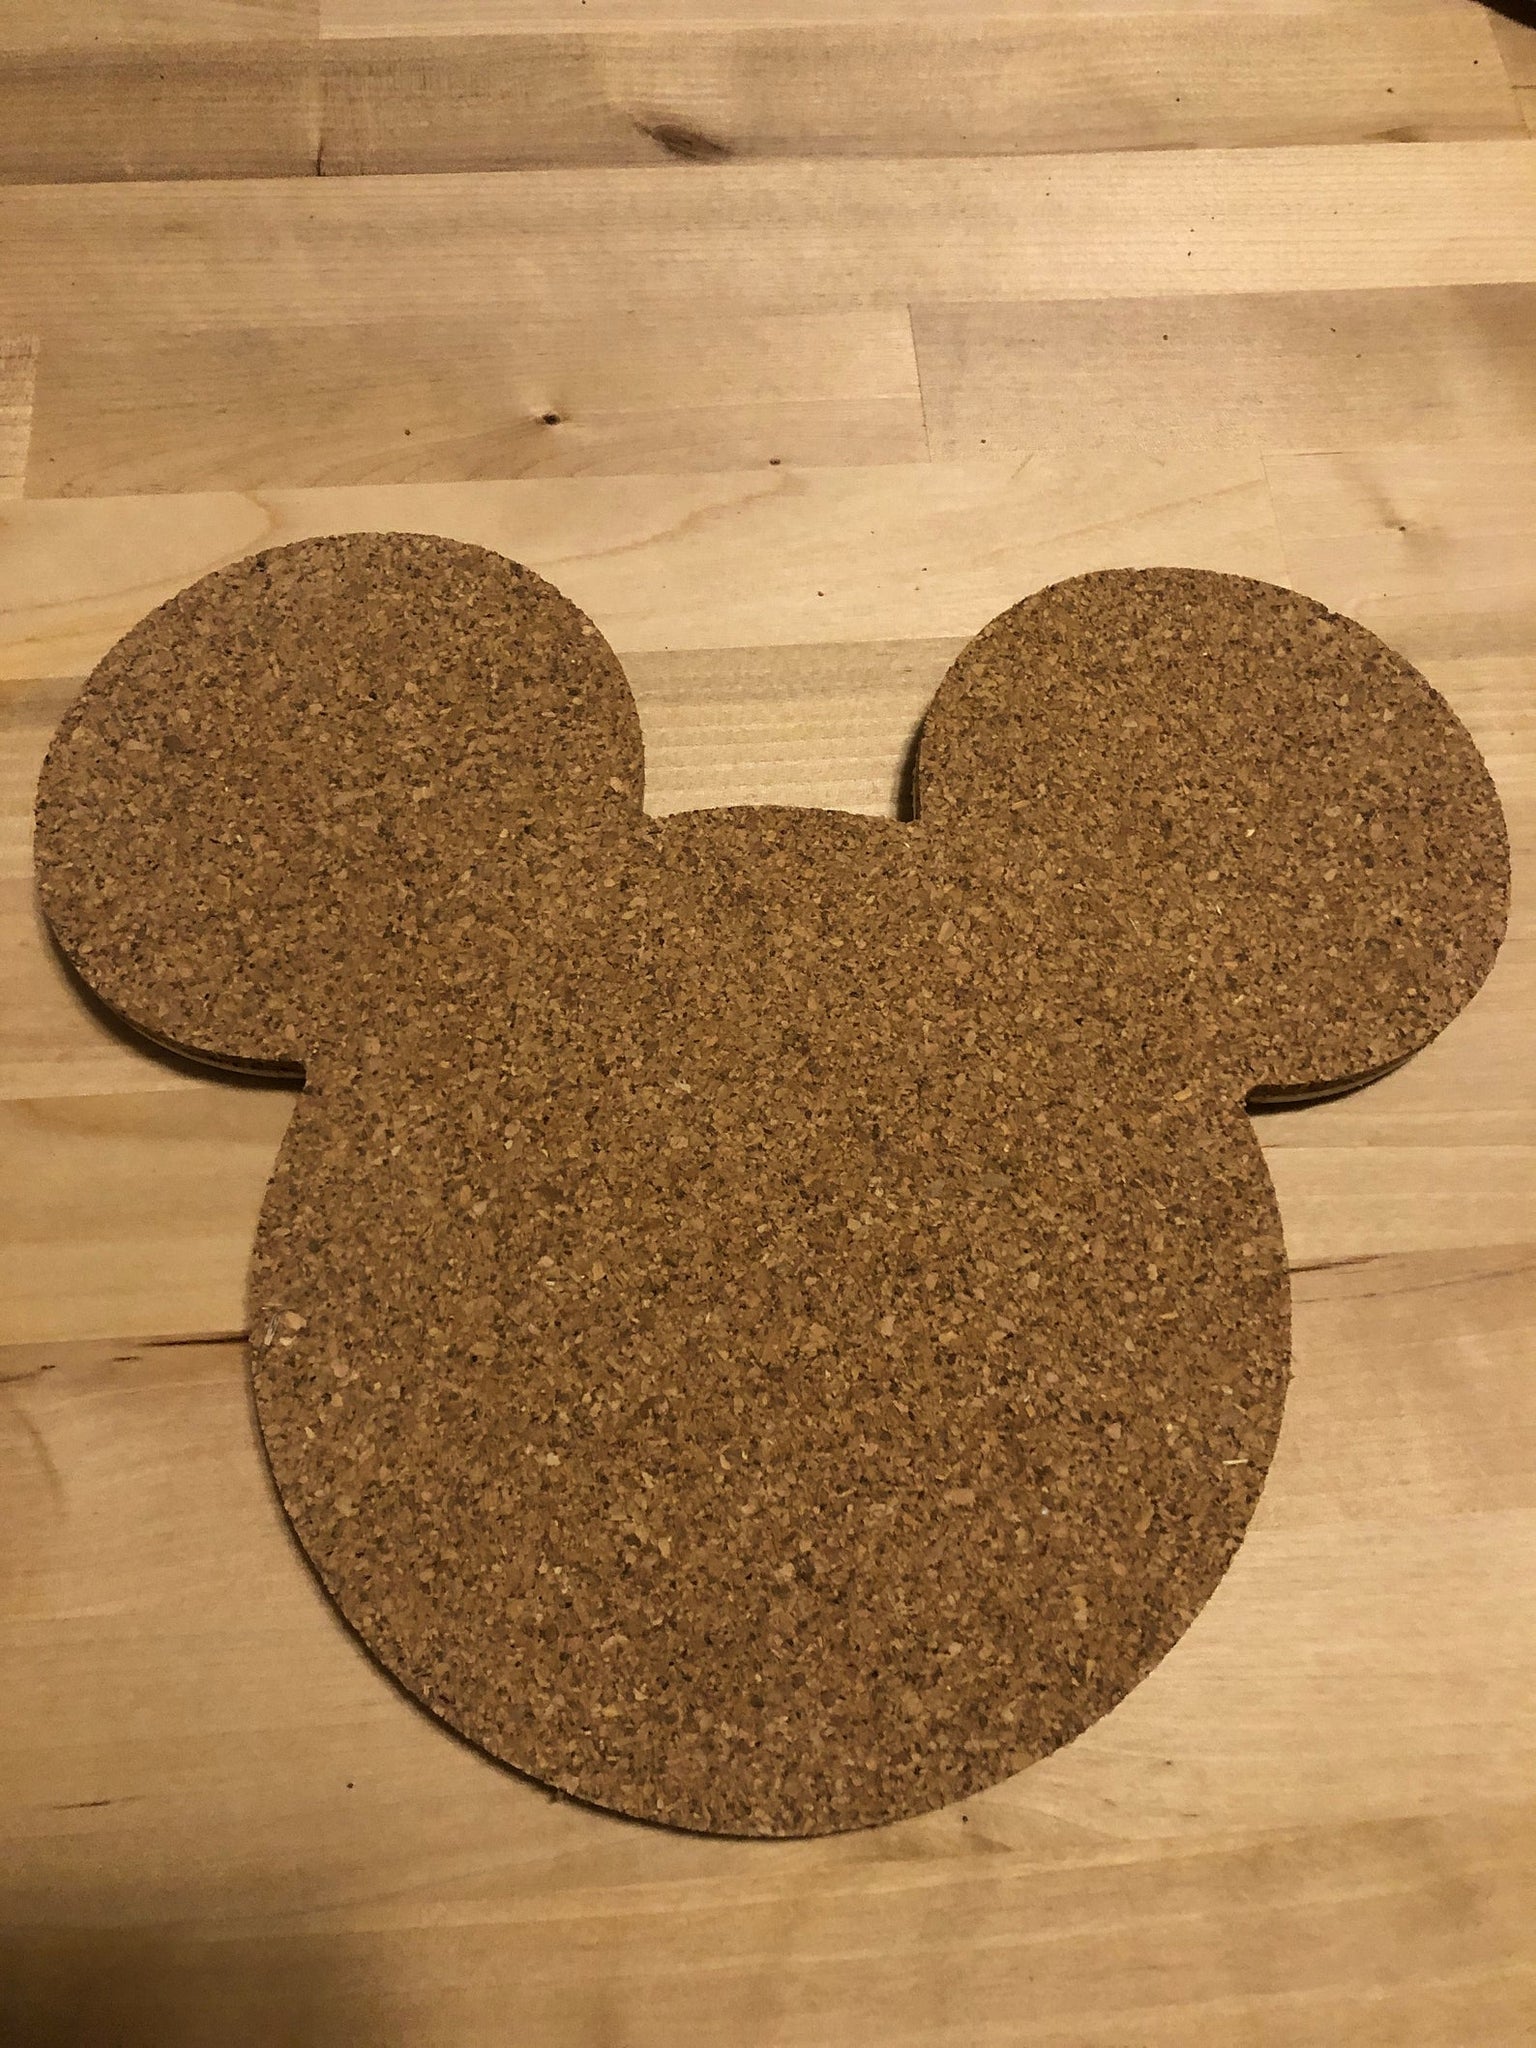 Mickey Mouse Cork Boards. Mickey Pin Display. Disney Pin Board